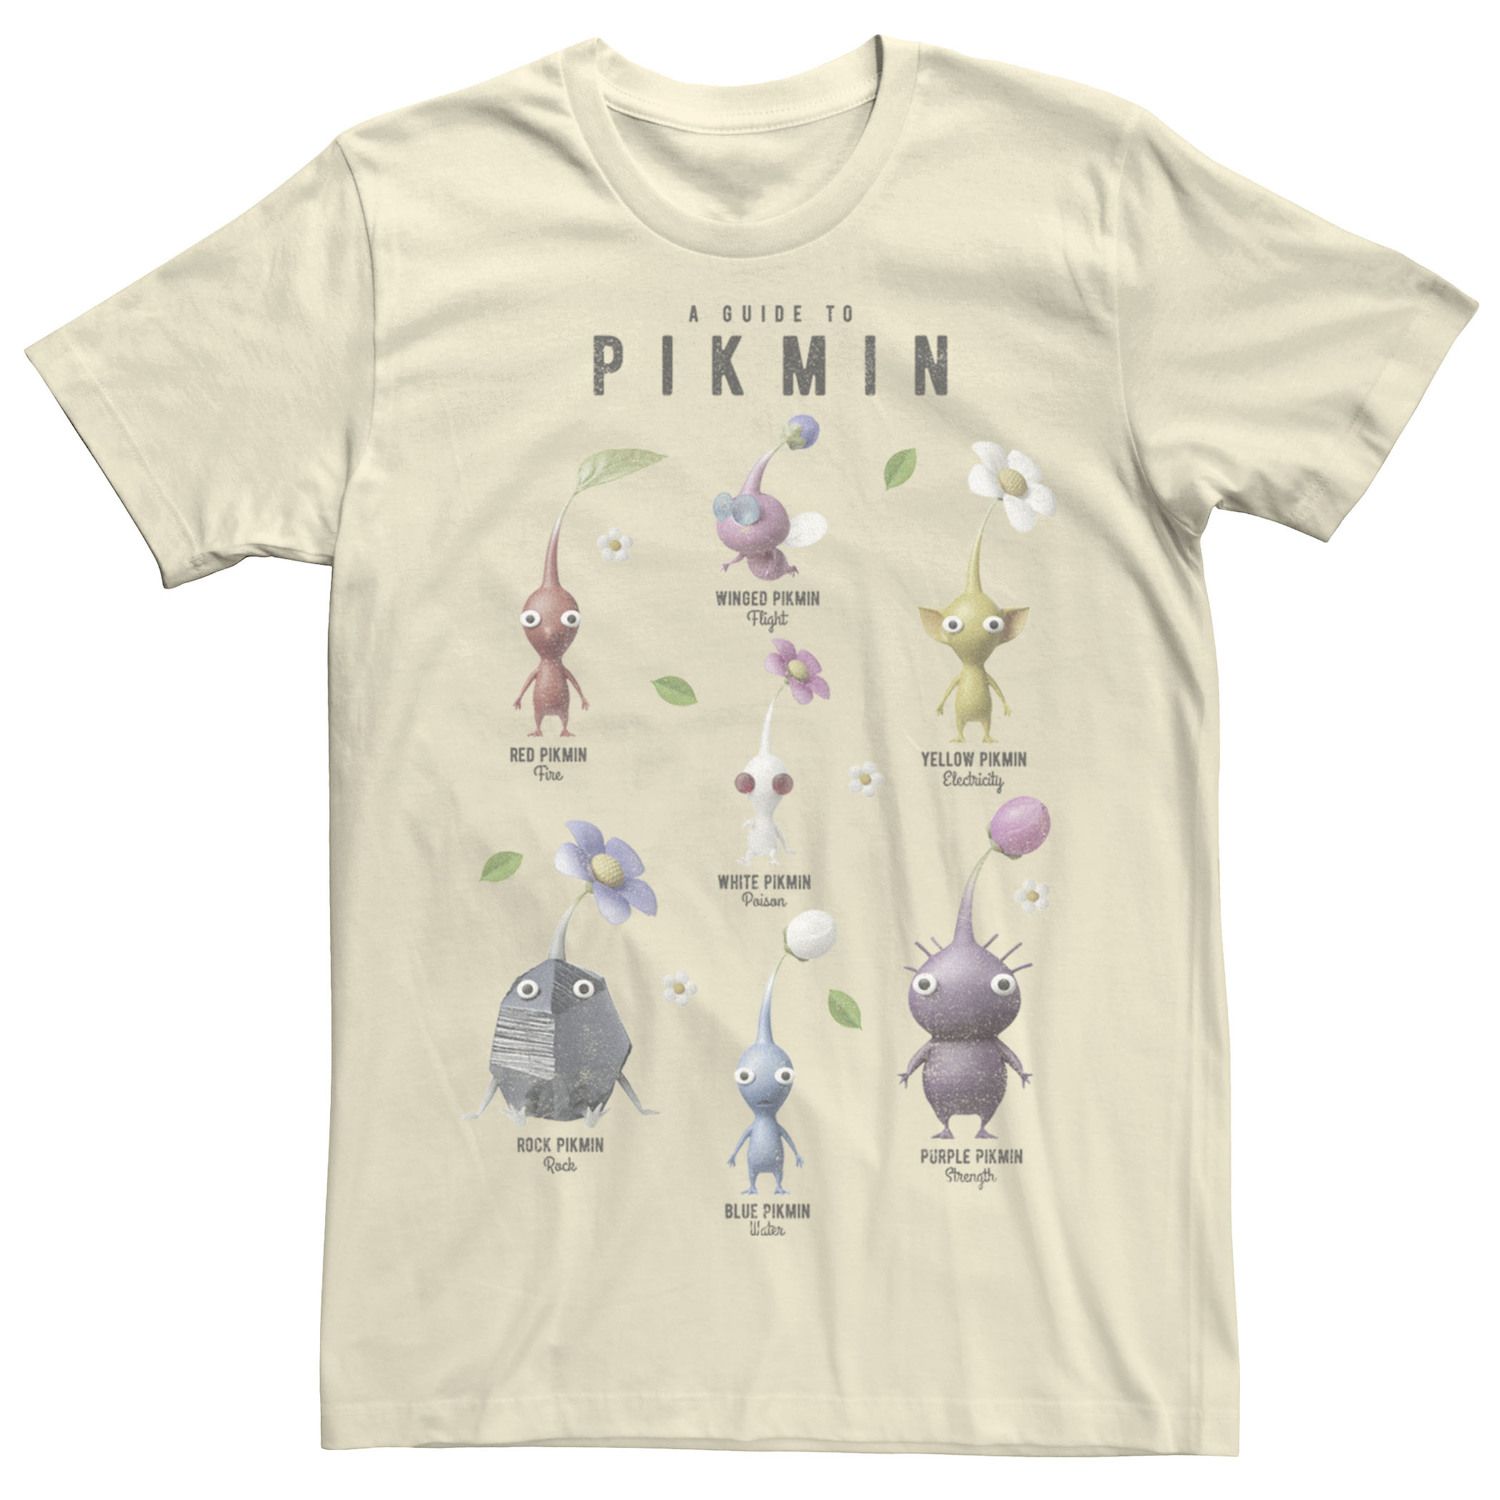 Мужская футболка с сеткой персонажей Nintendo Pikmin 3 Licensed Character